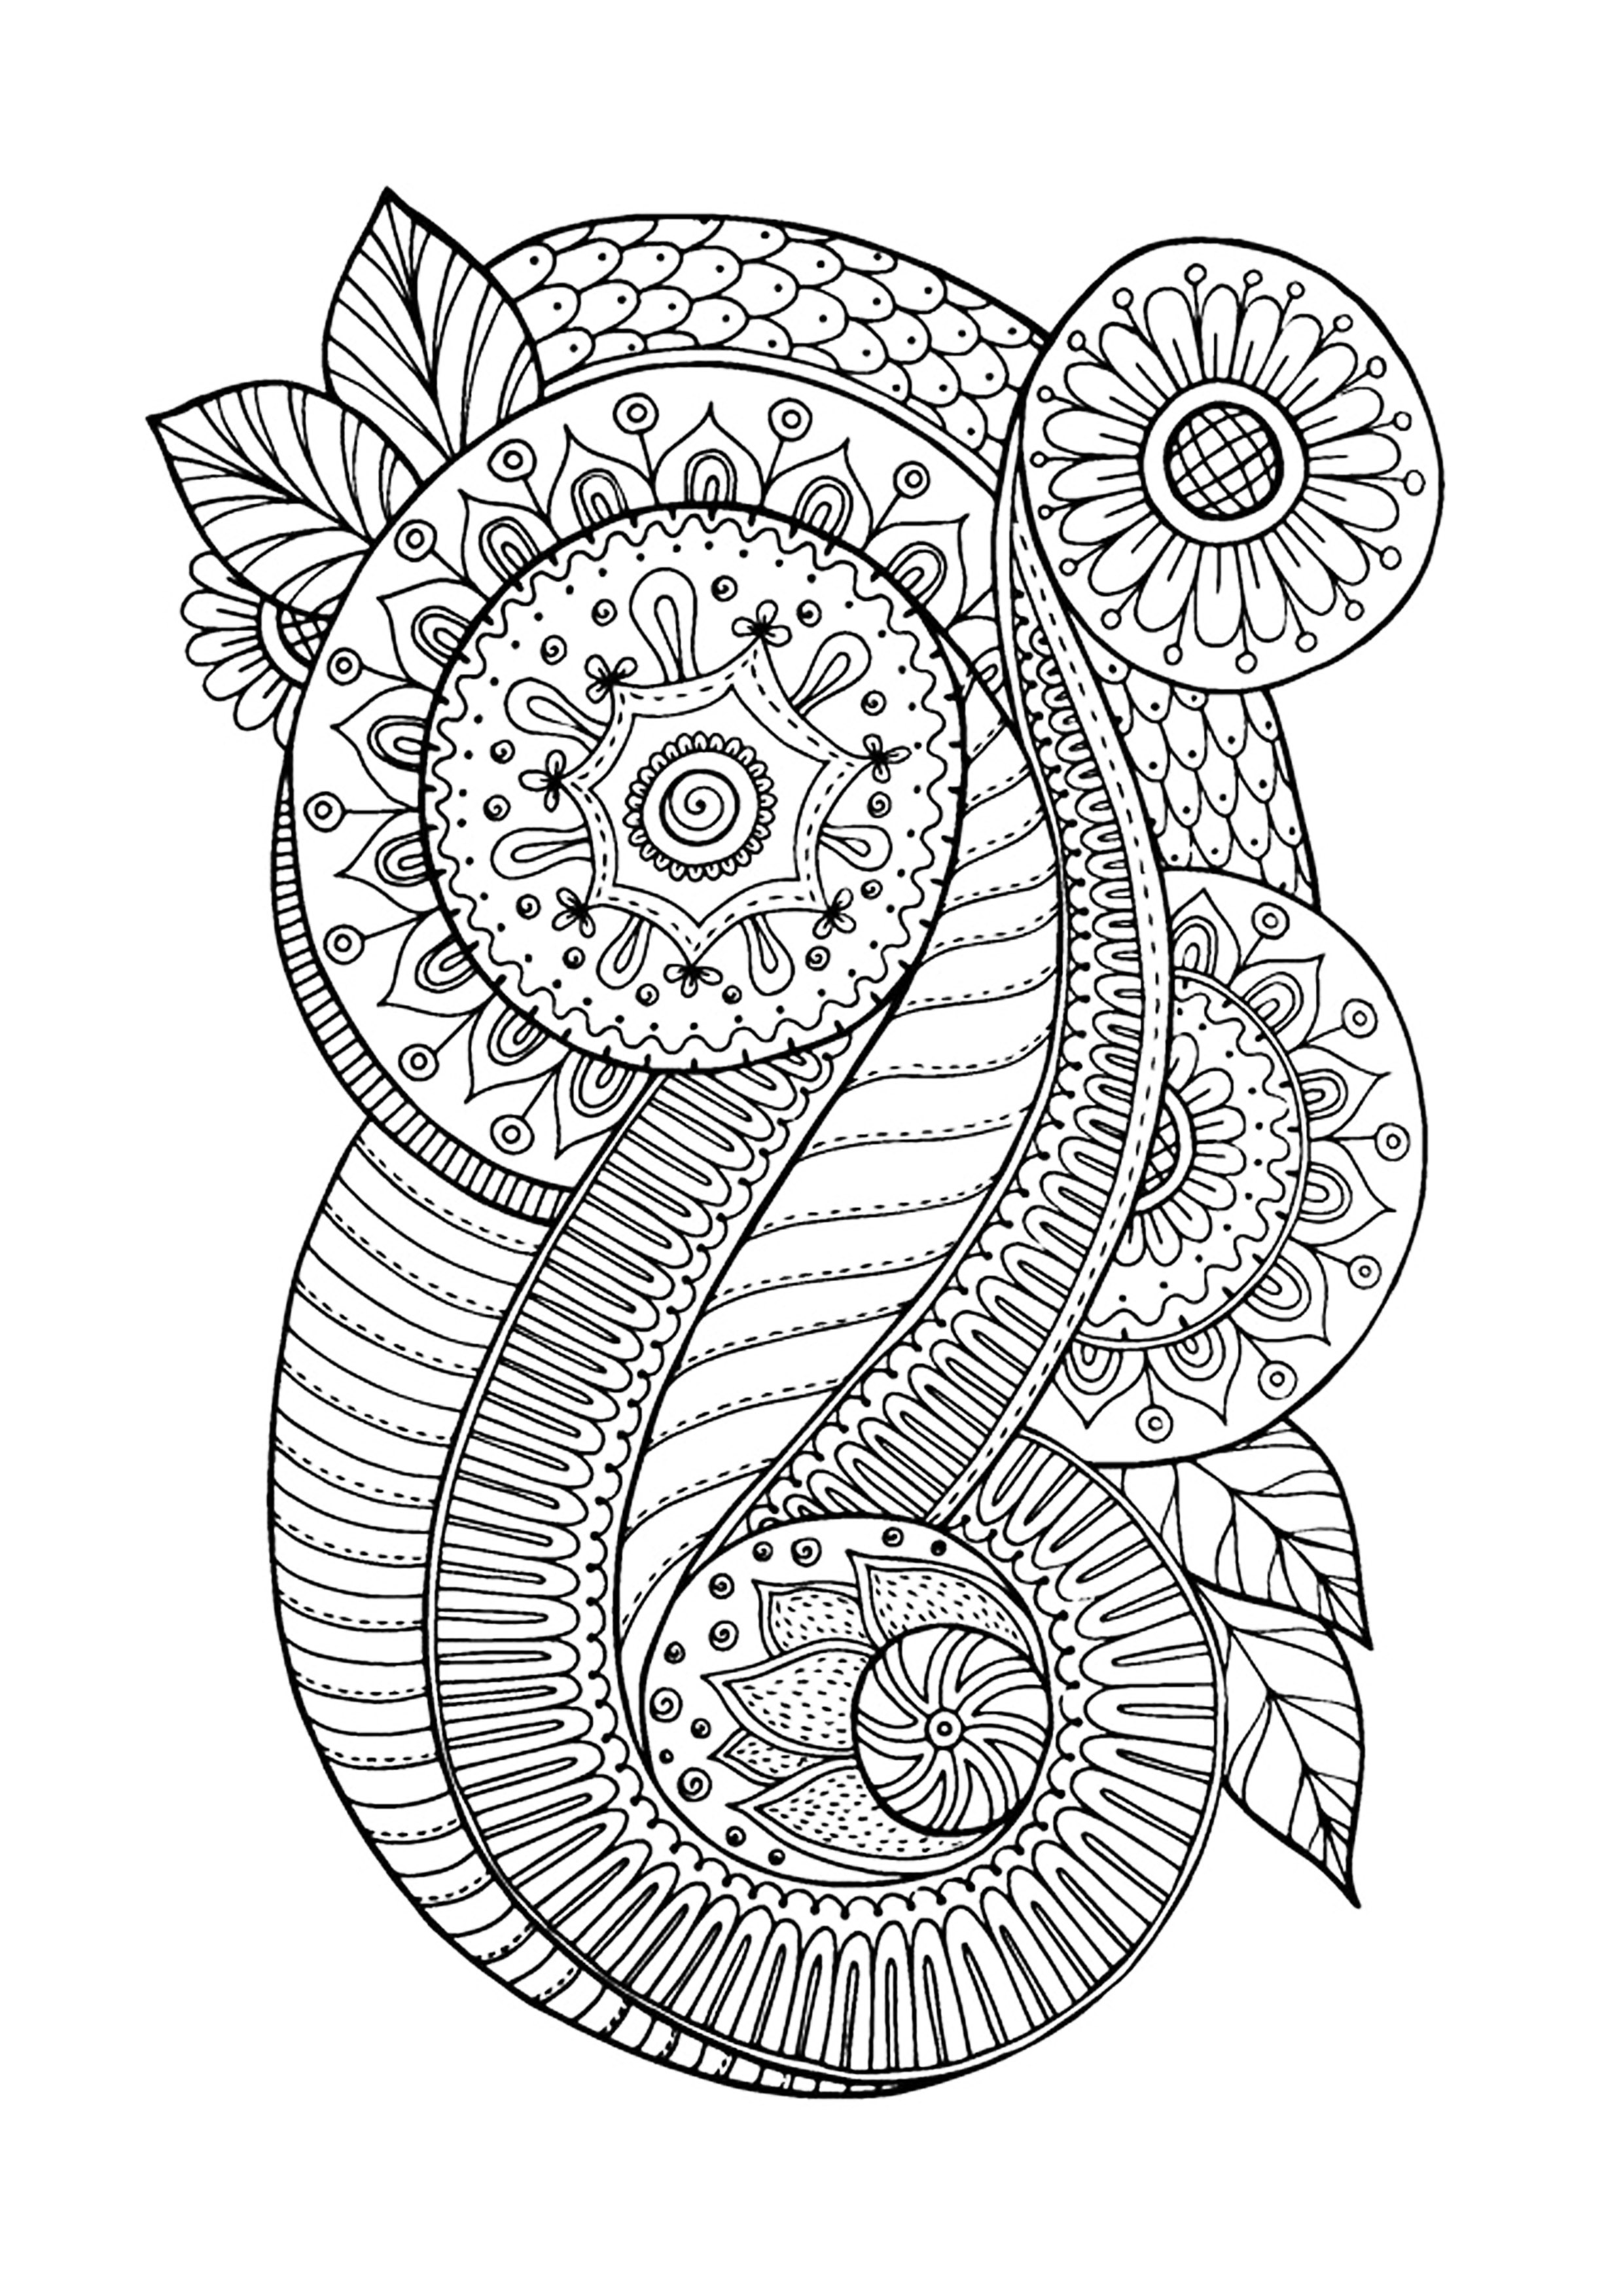 Desenhos simples para colorir de Anti-Stress / Zen, Artista : Juliasnegireva   Fonte : 123rf